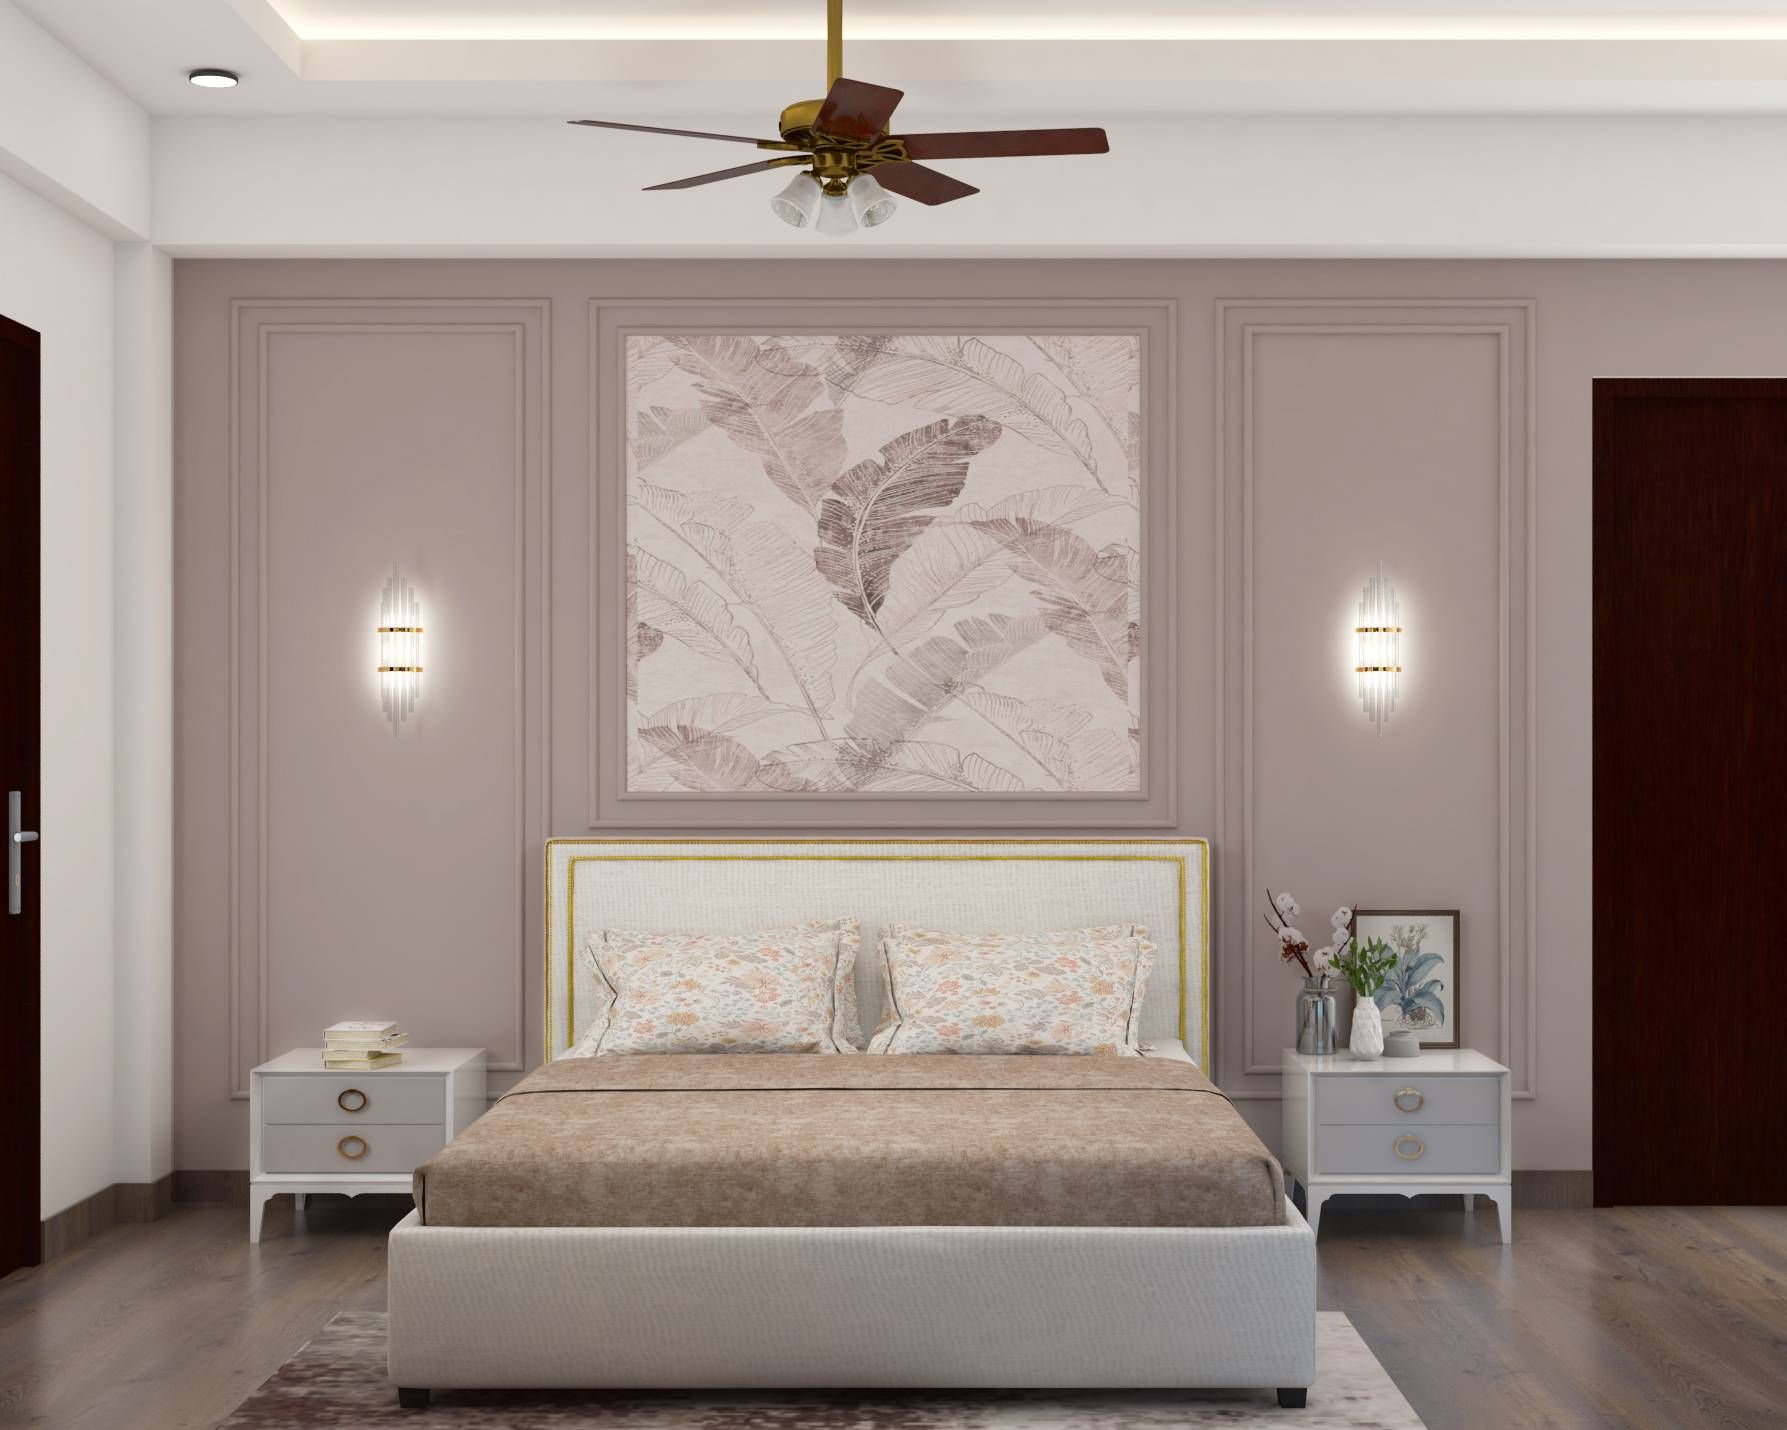 Modern Spacious Master Bedroom Design In Pink